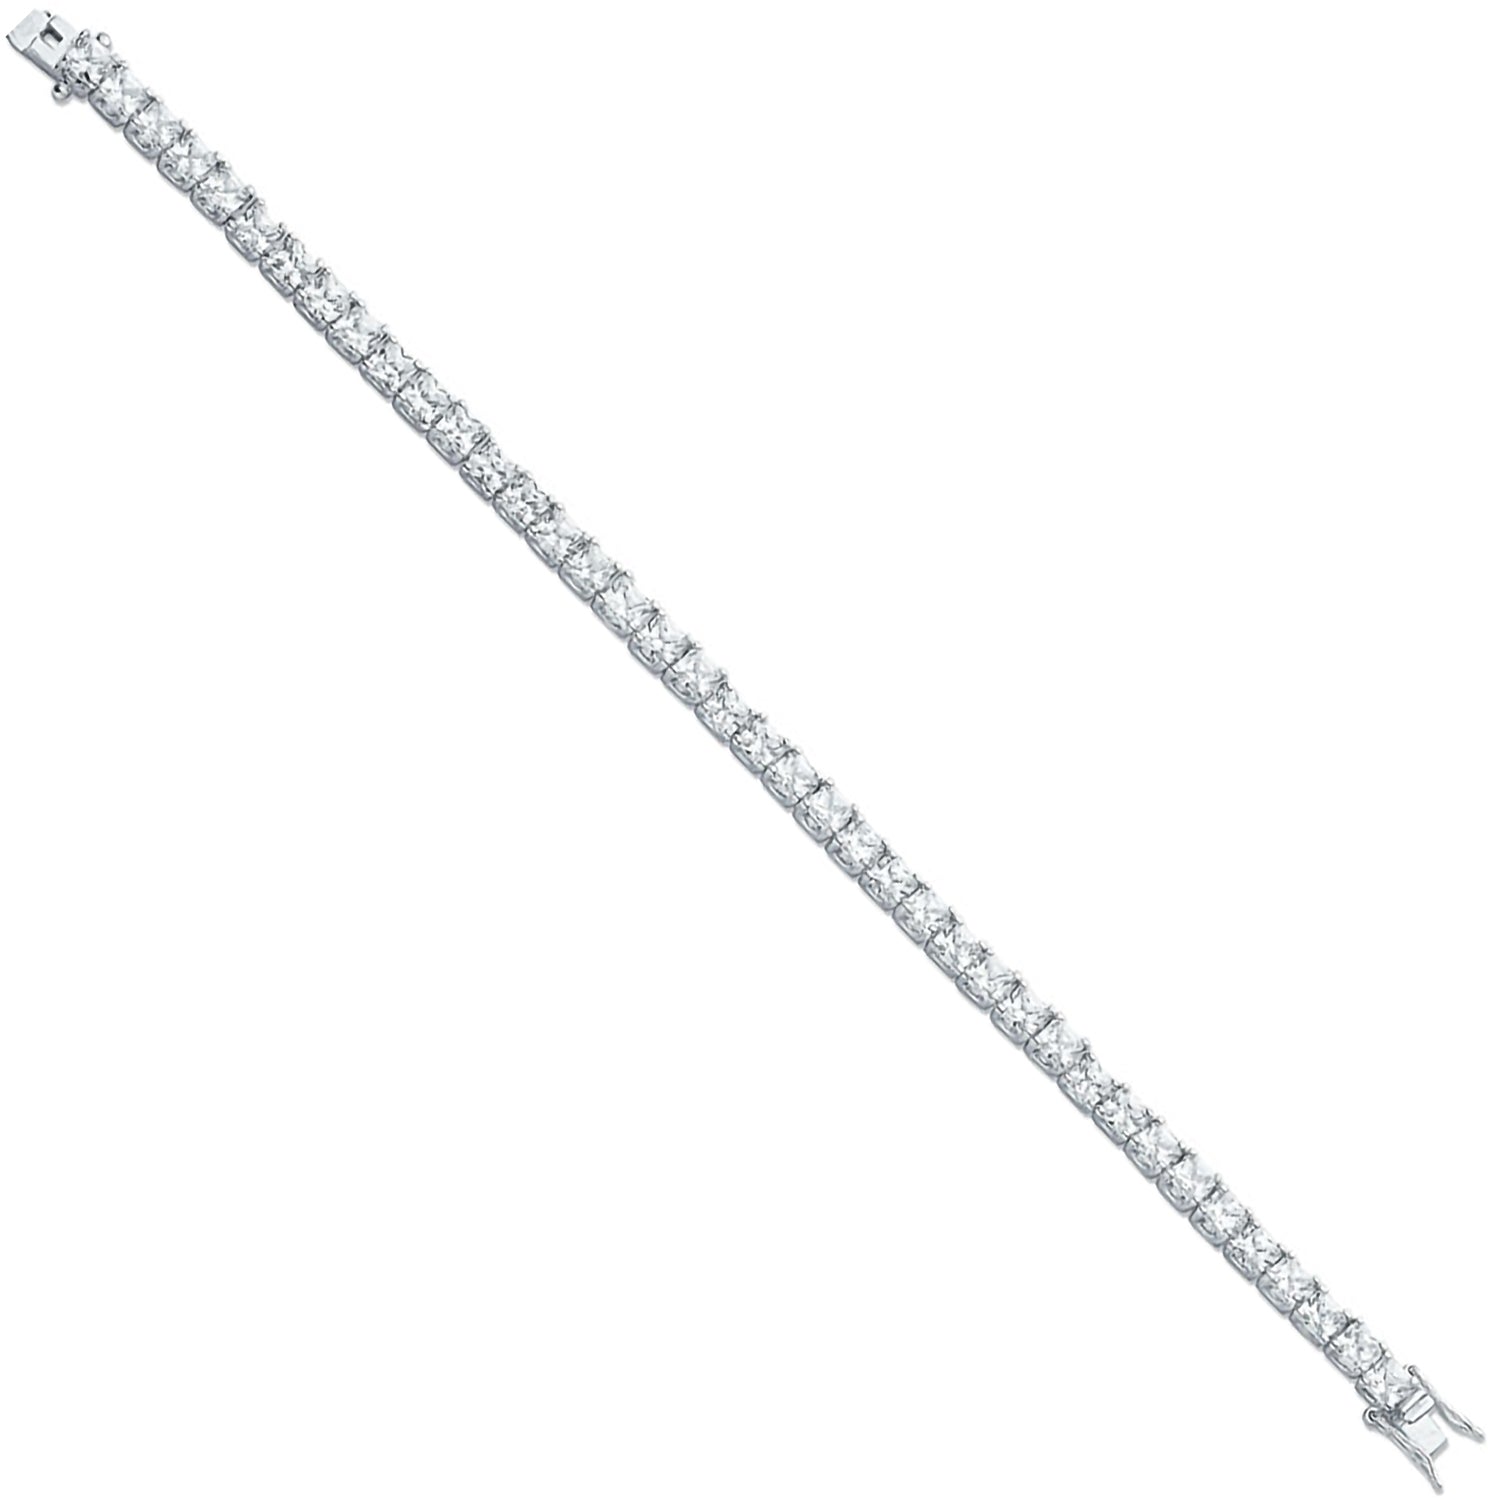 Silver 4.3mm Princess Cut Cubic Zirconia Tennis Bracelet